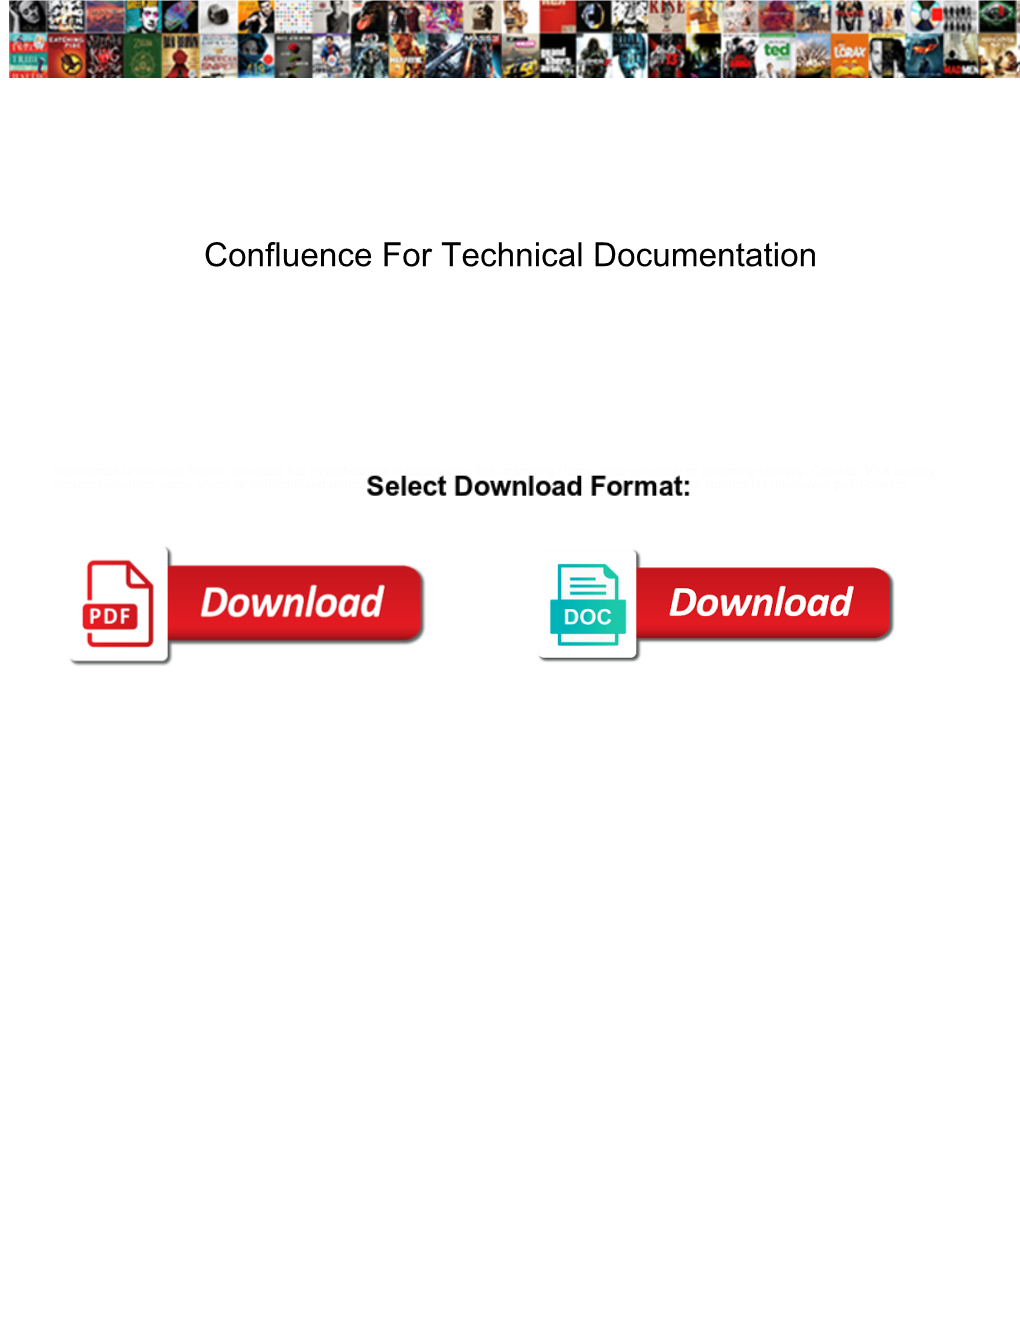 Confluence for Technical Documentation